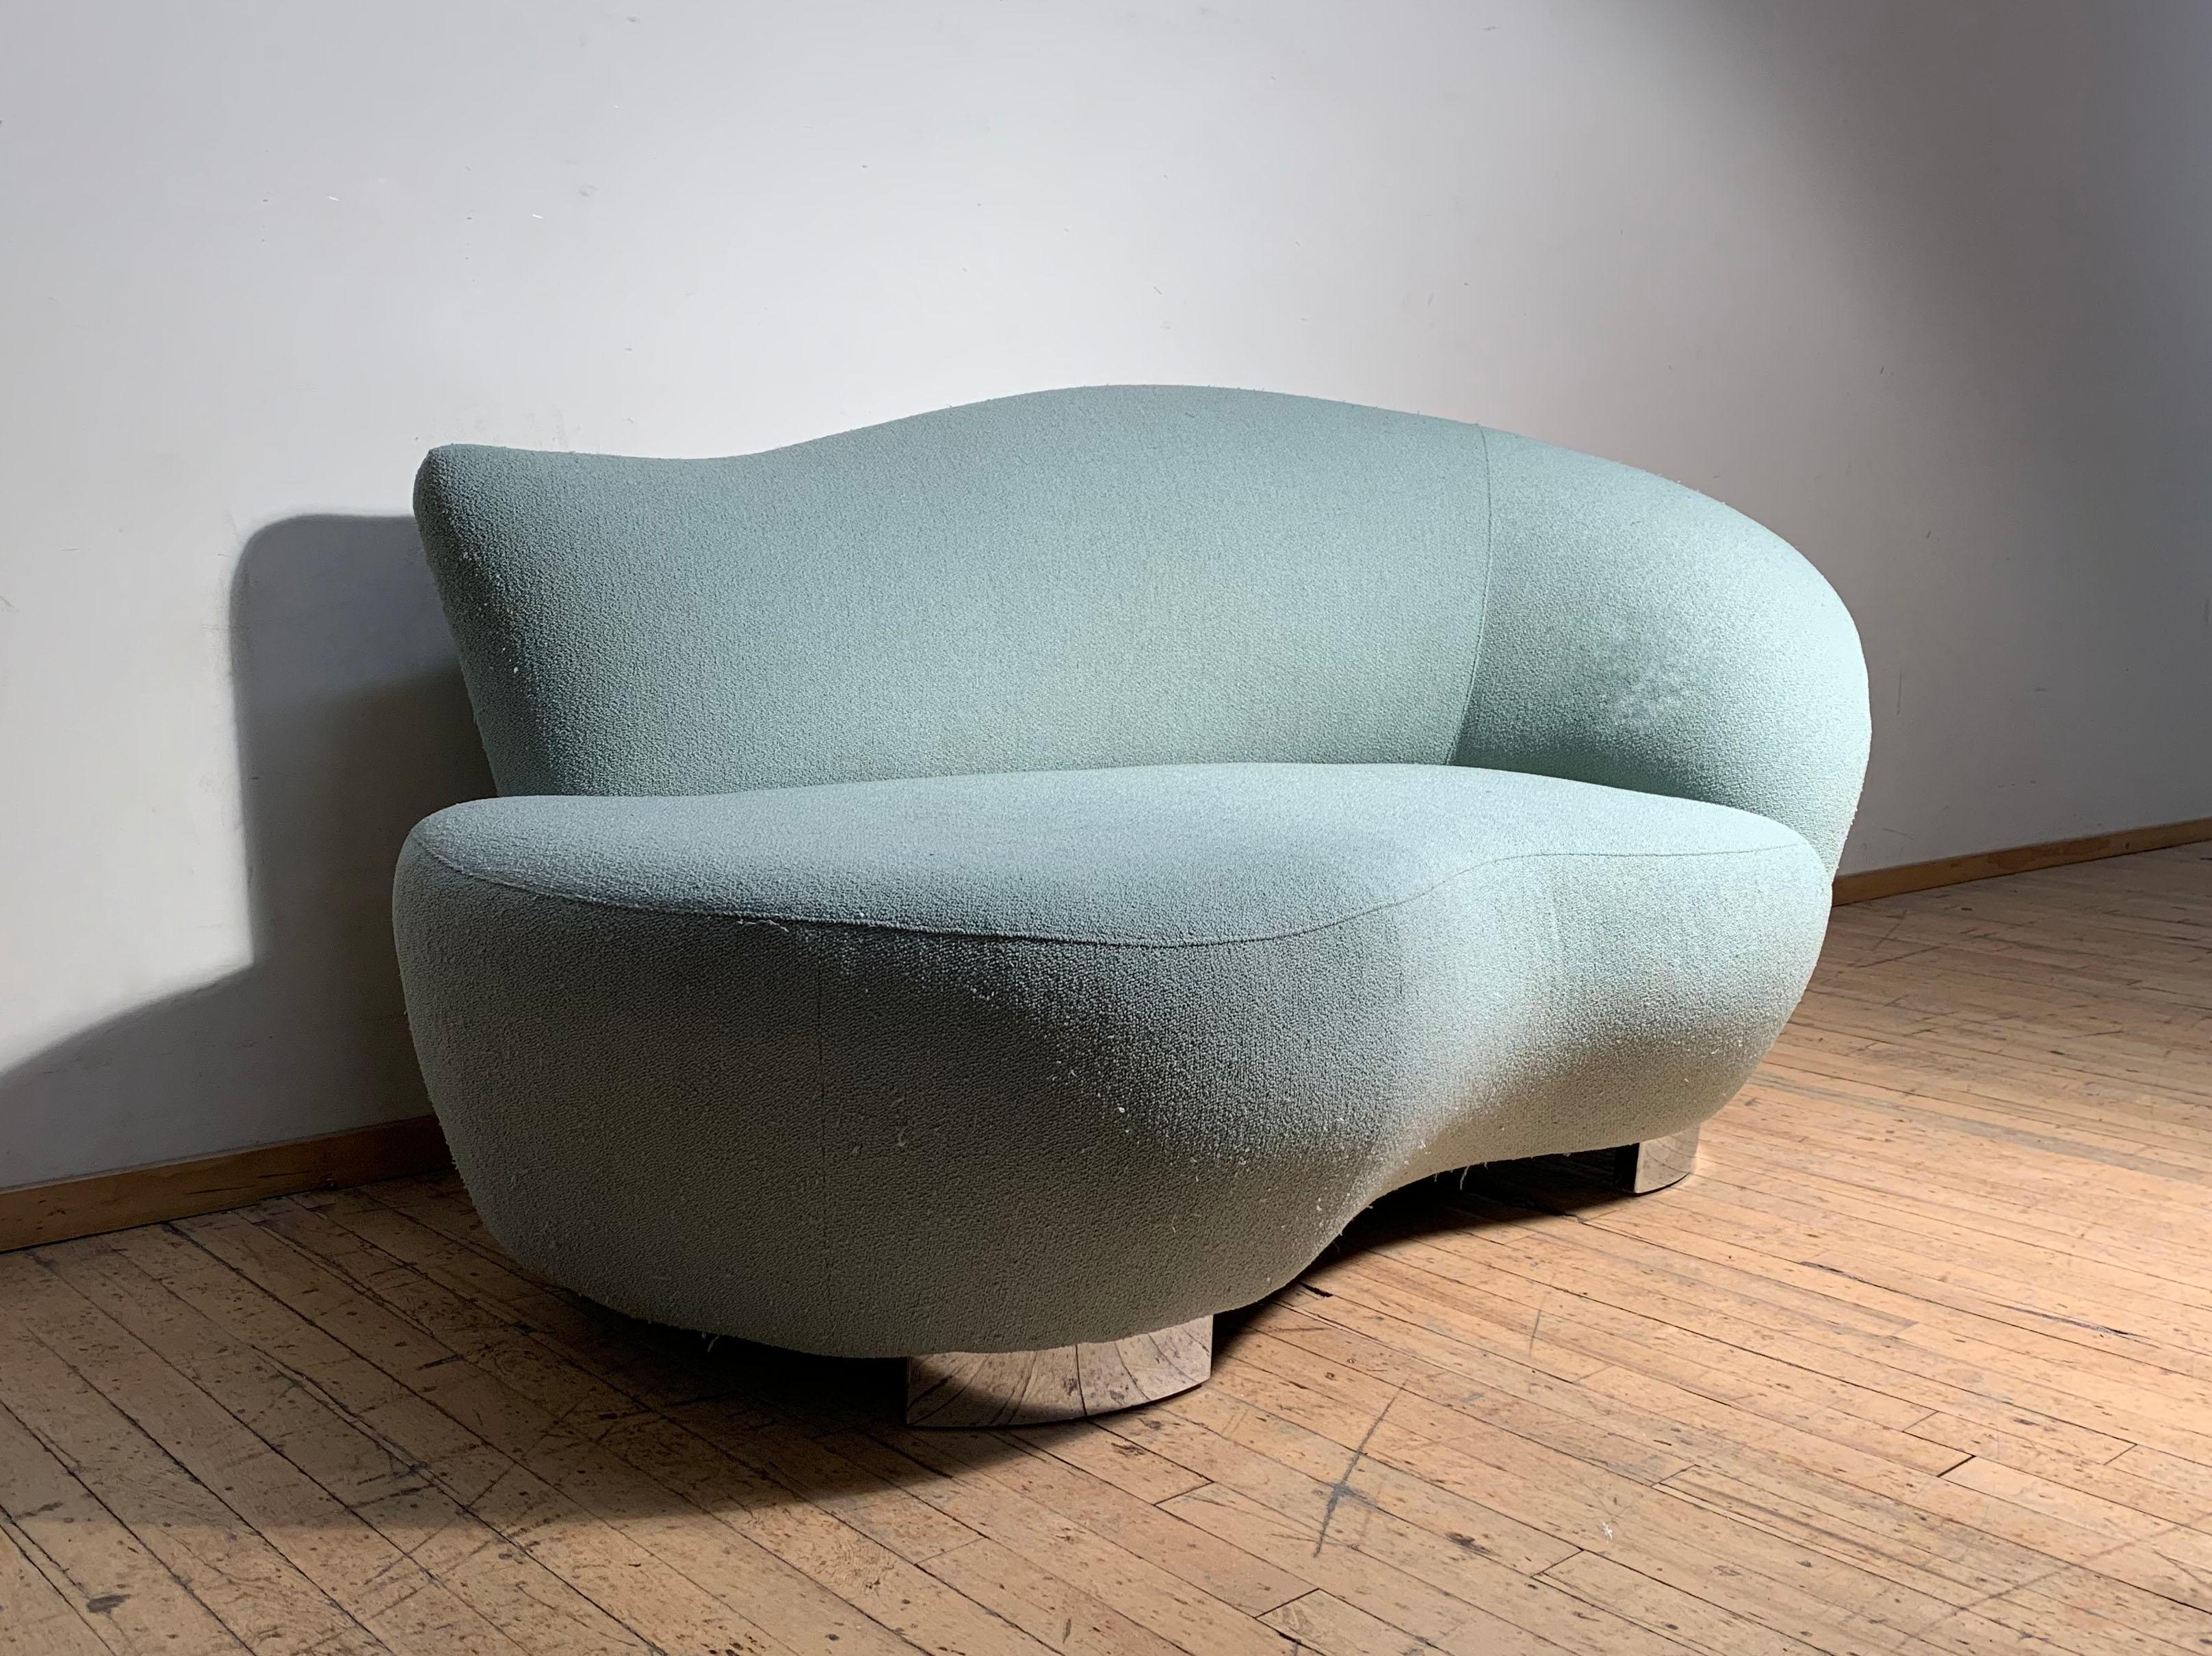 Upholstery Petite Vladimir Kagan Loveseat Cloud Sofa / Chaise Lounge